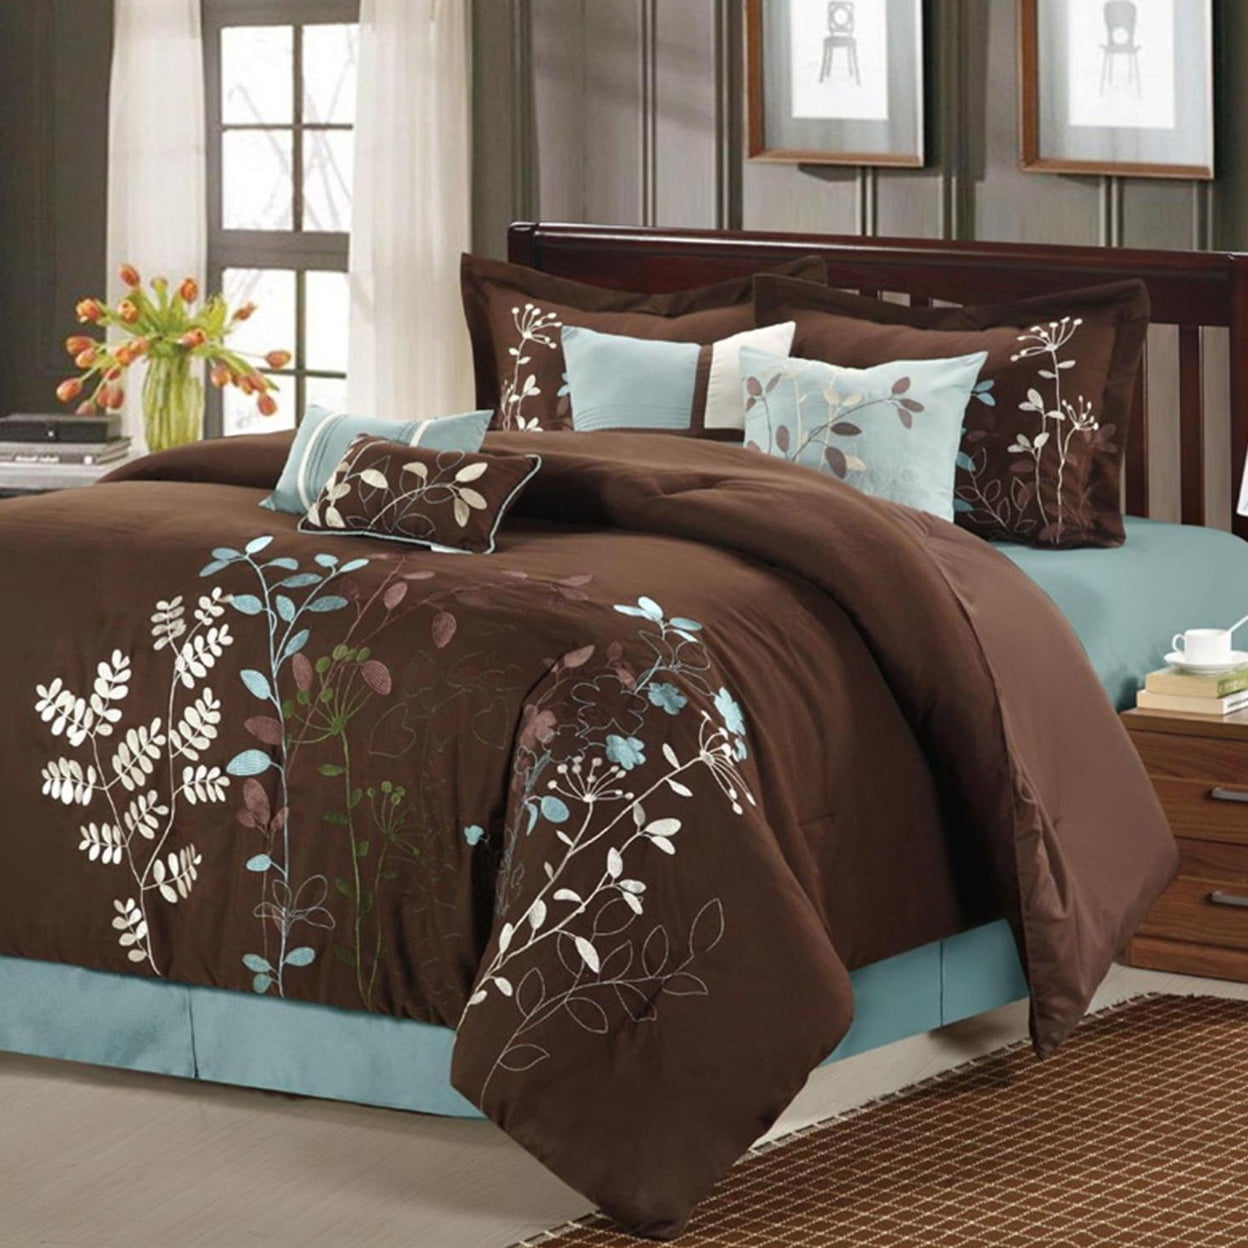 21ck102-us Bliss Garden Embroidered Comforter Set - Brown - King - 8 Piece